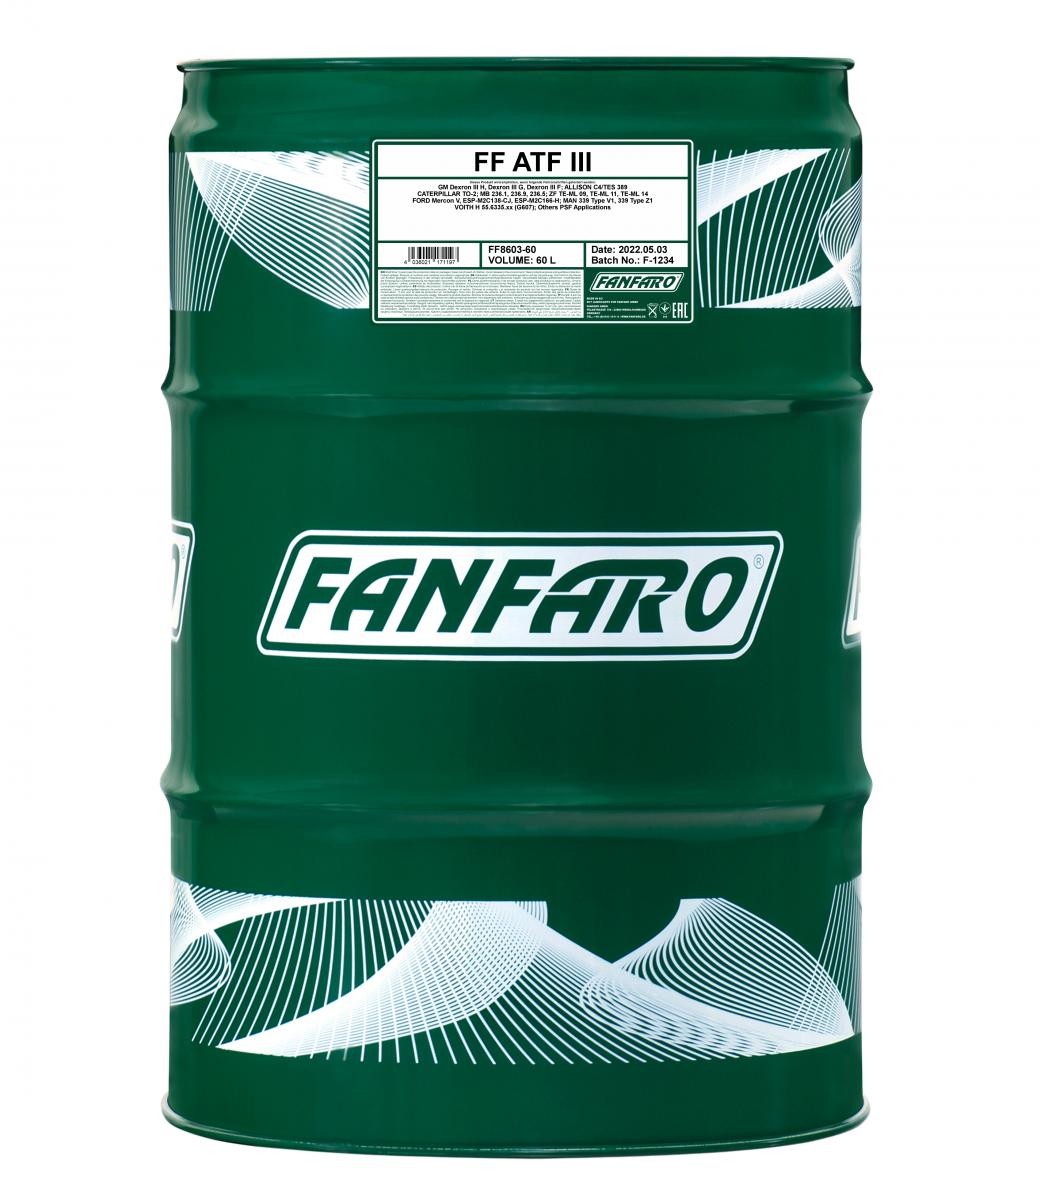 FF8603-60 FANFARO Automatikgetriebeöl VOLVO FMX II